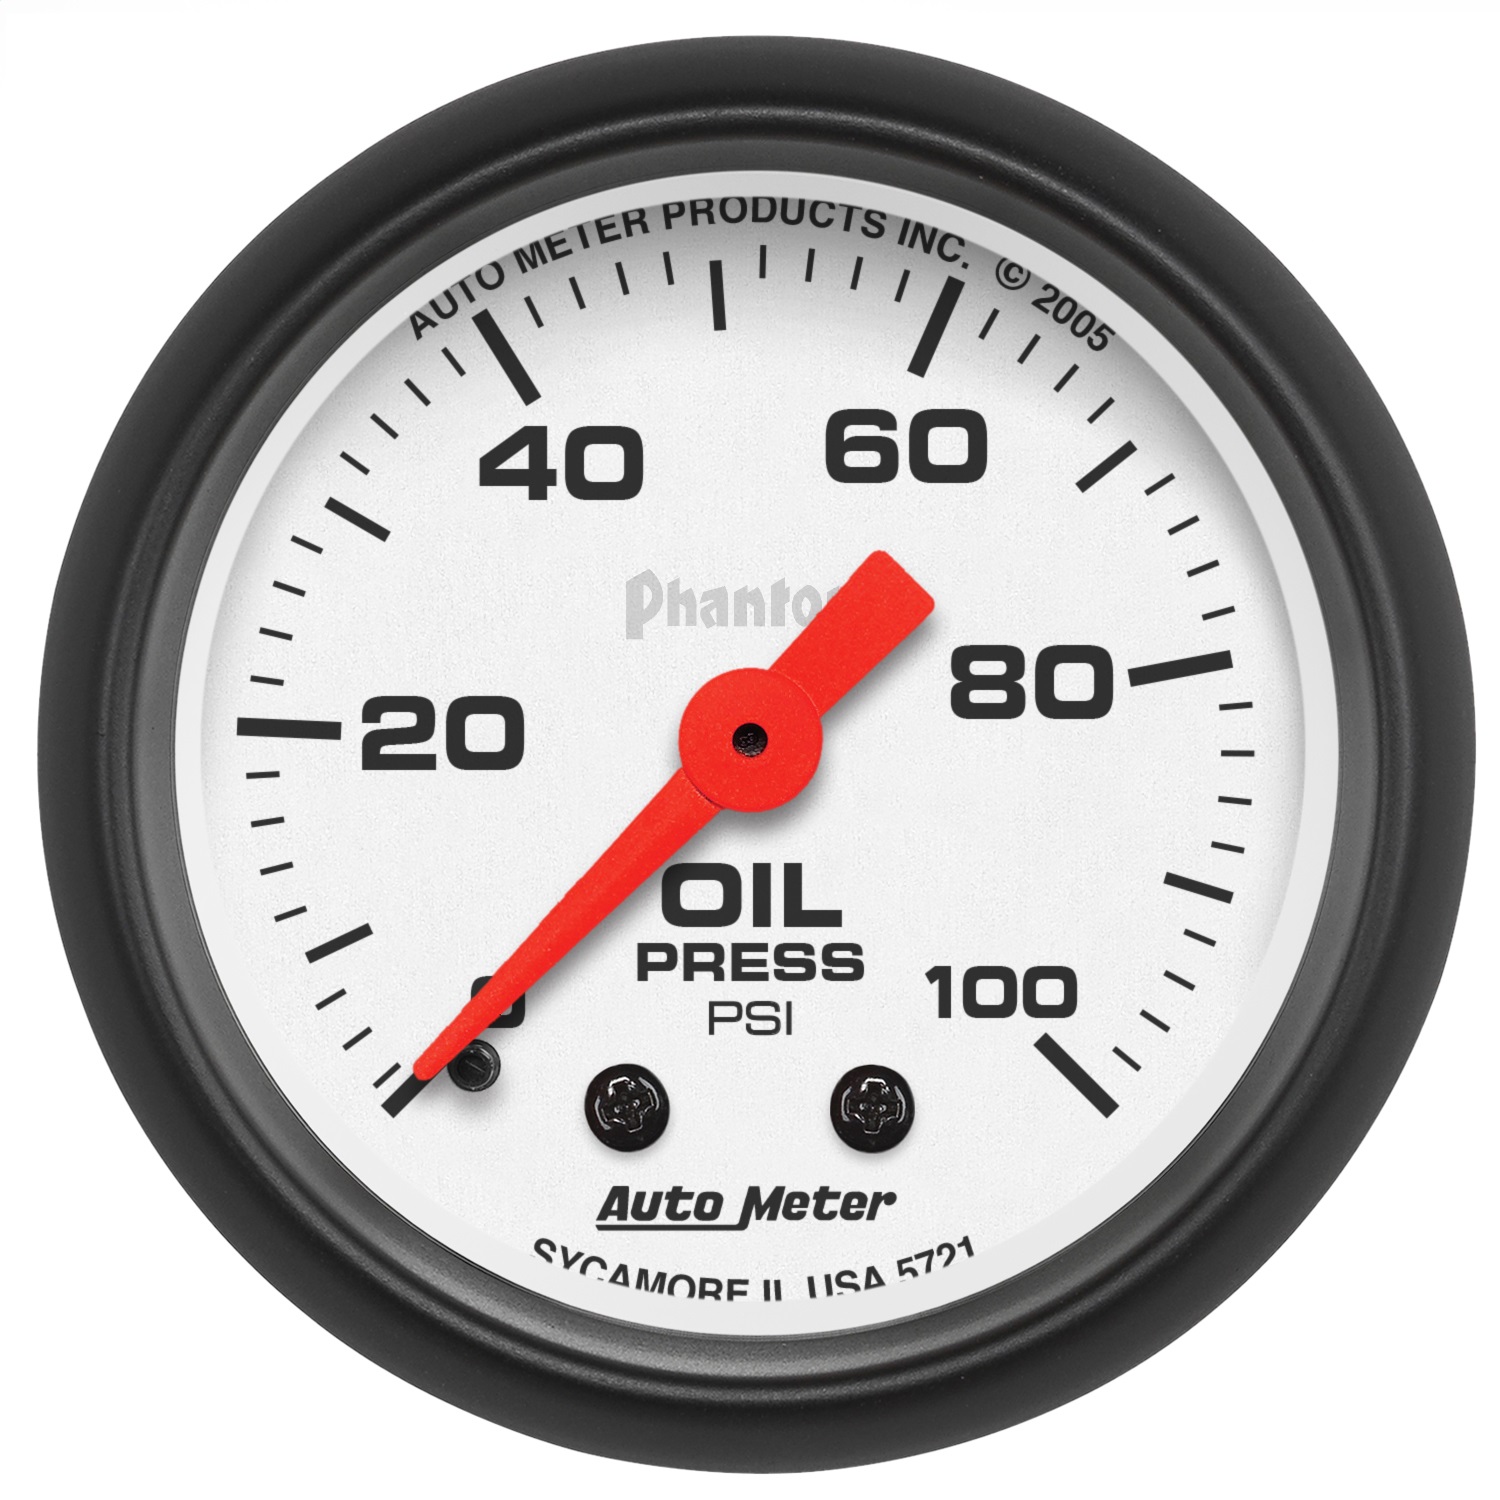 Auto Meter Auto Meter 5721 Phantom; Mechanical Oil Pressure Gauge